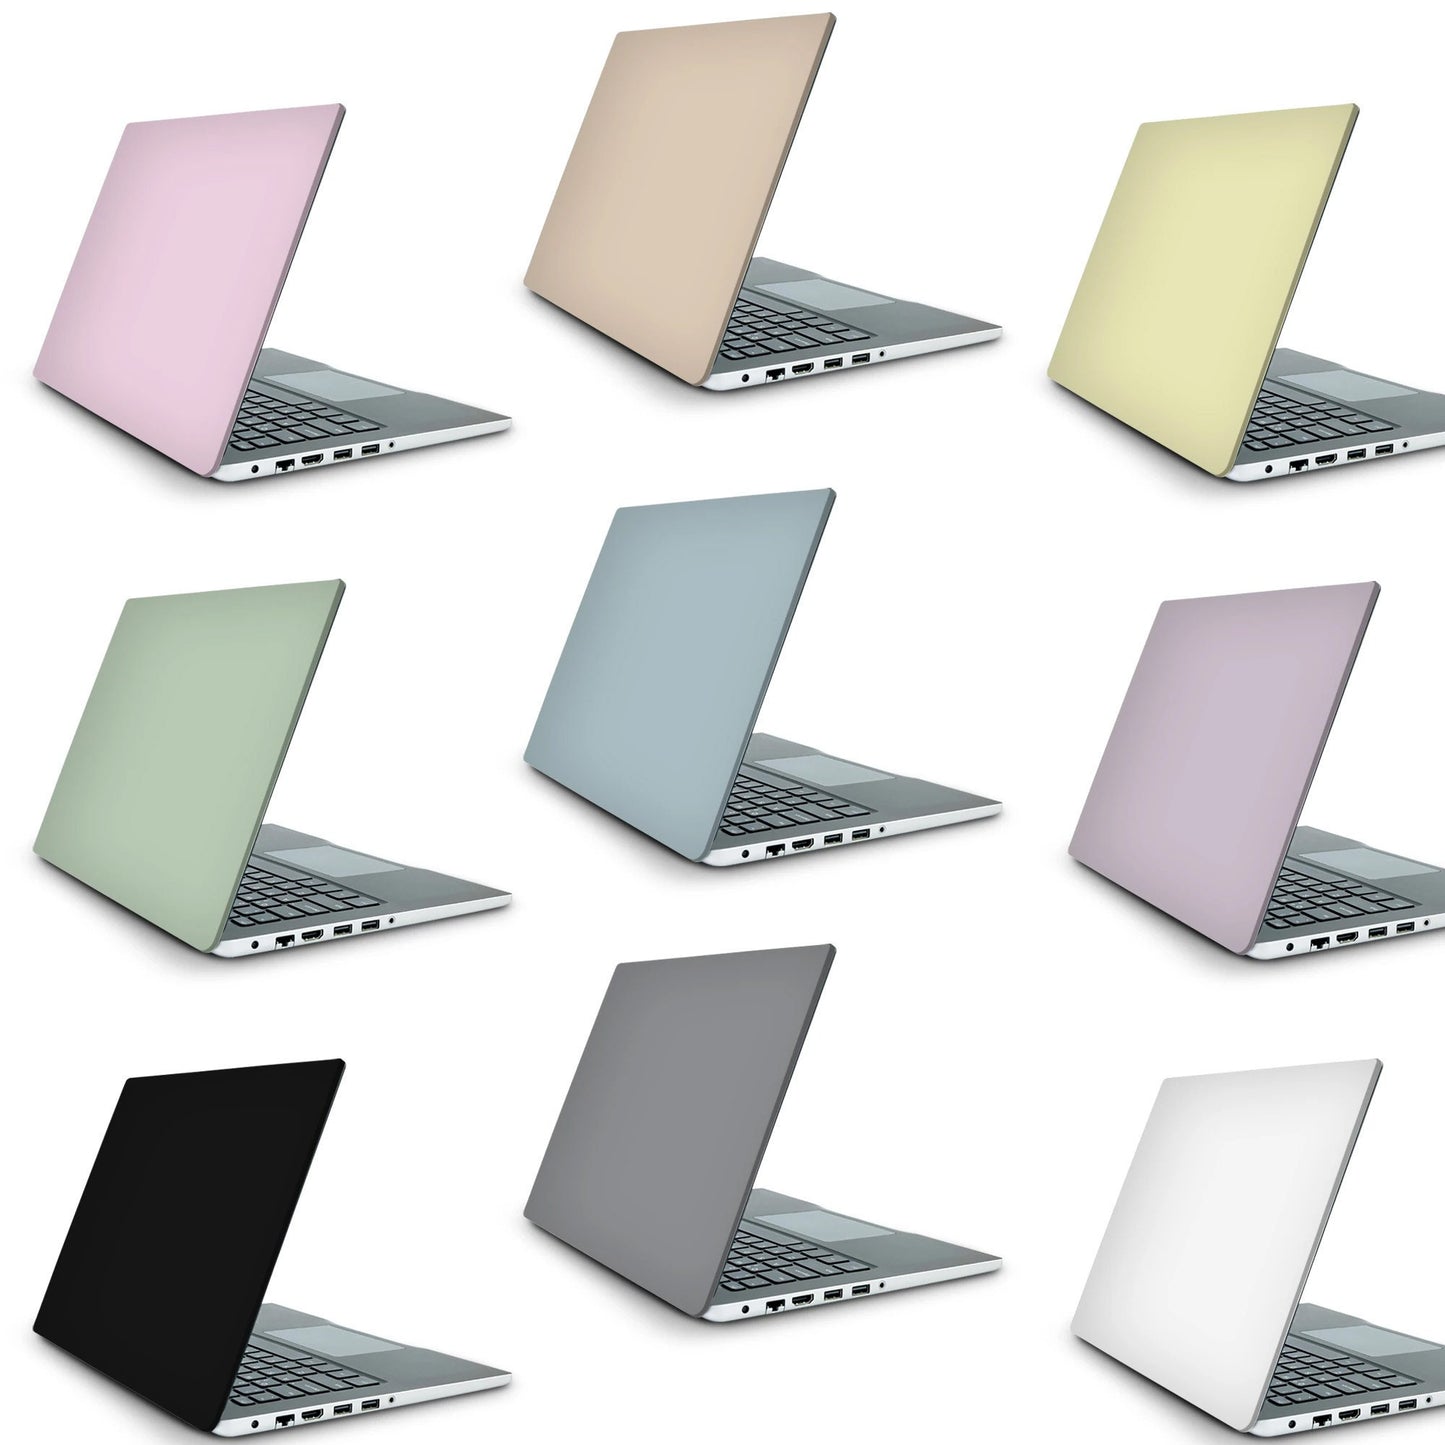 Tropical Laptop Skin, Laptop Cover, Laptop Skins, Removable Laptop Skins, Laptop Decal, Customized Laptop Skin, Laptop Stickers 162